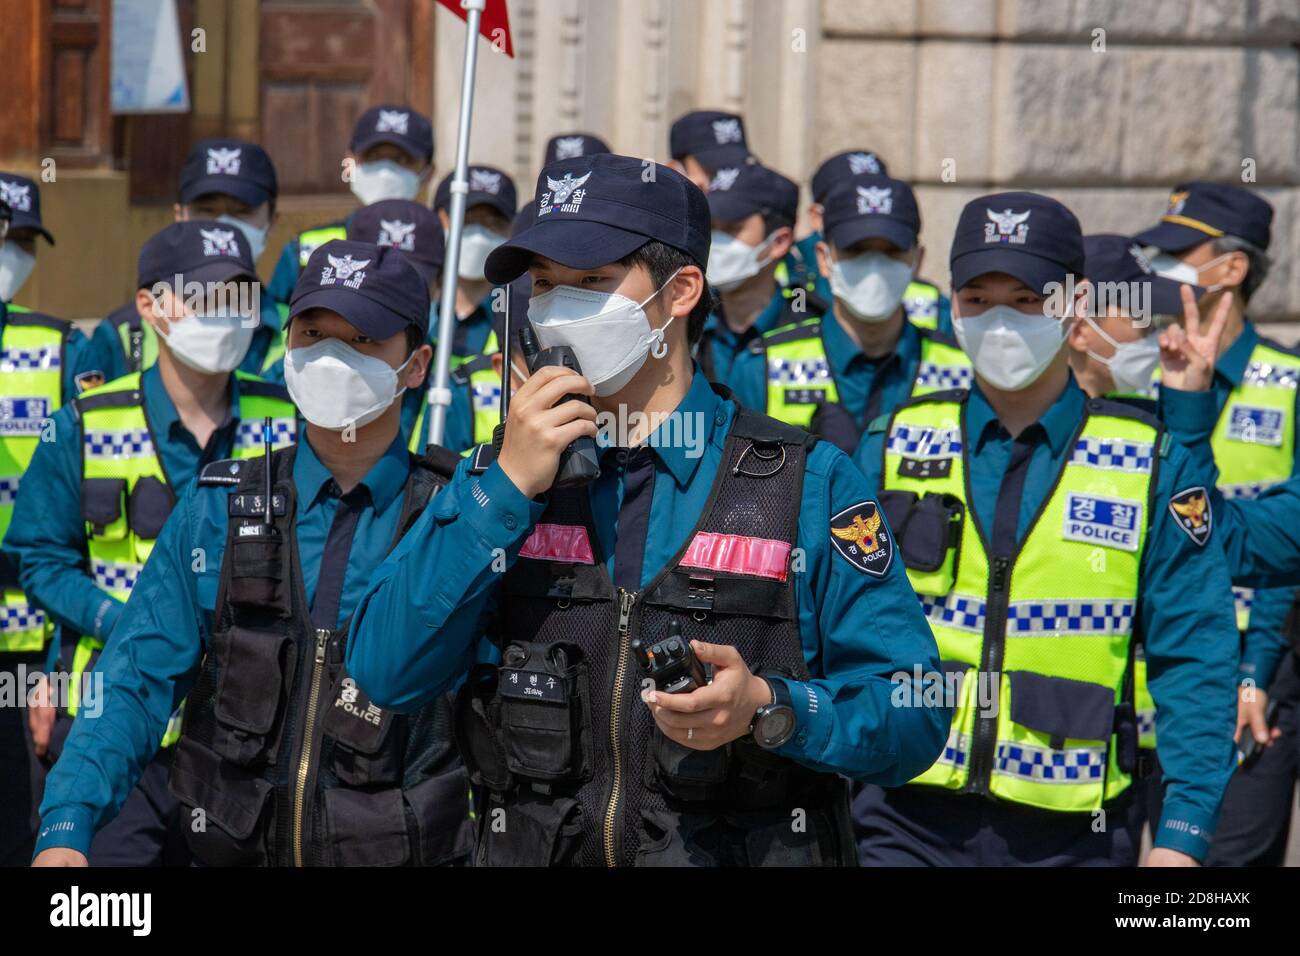 Police wearing masks during the Coronavirus pandemic, Seoul, South Korea Stock Photo